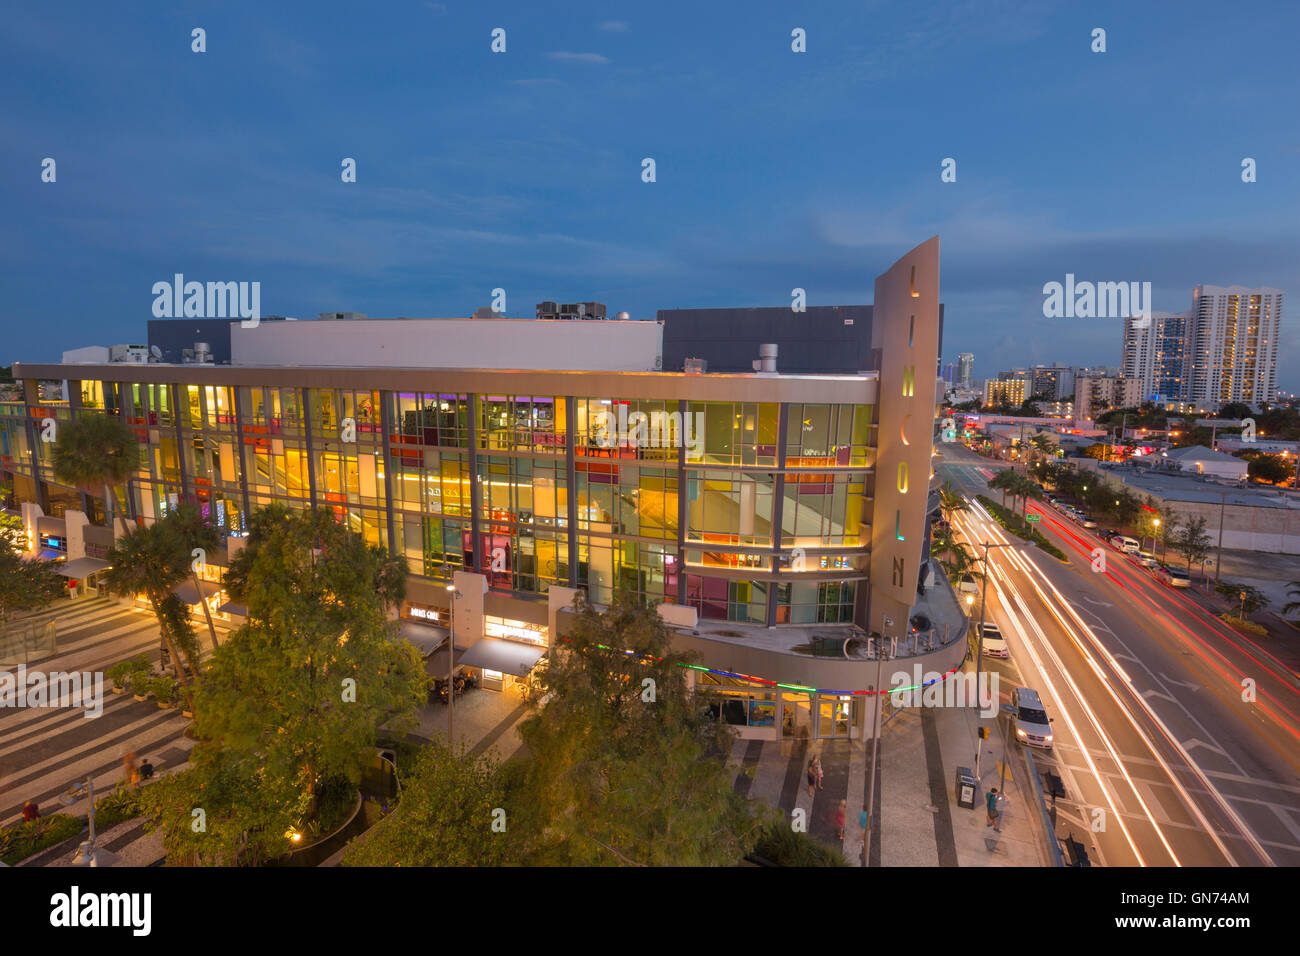 Dolphin Mall Cinema, Miami, Florida, USA Stock Photo - Alamy